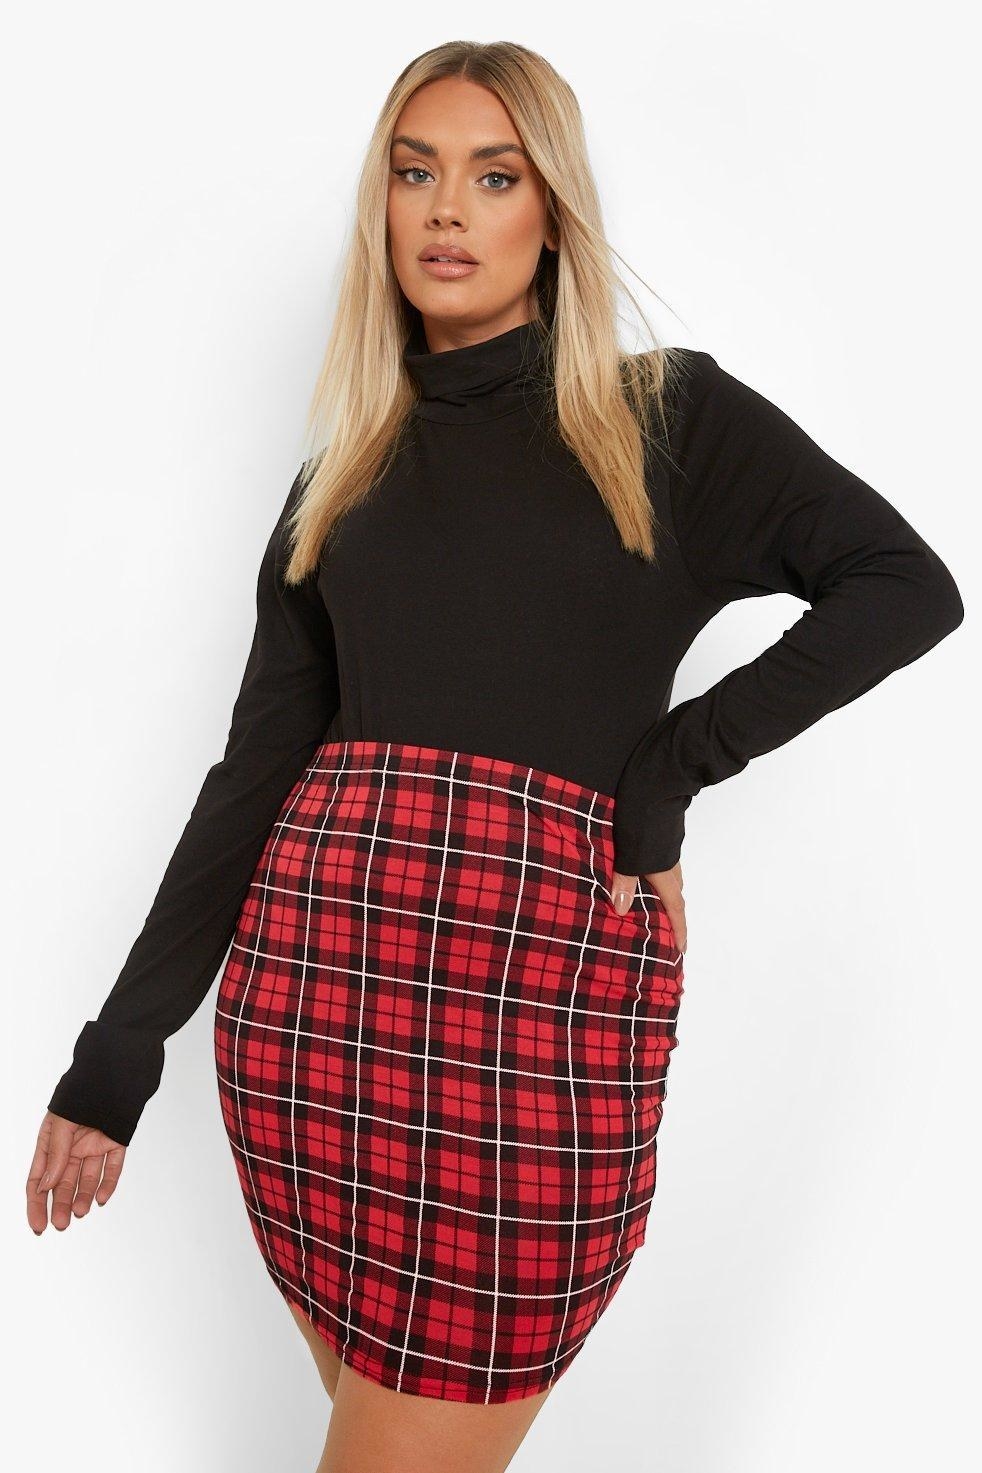 model in black turtleneck and red check mini skirt